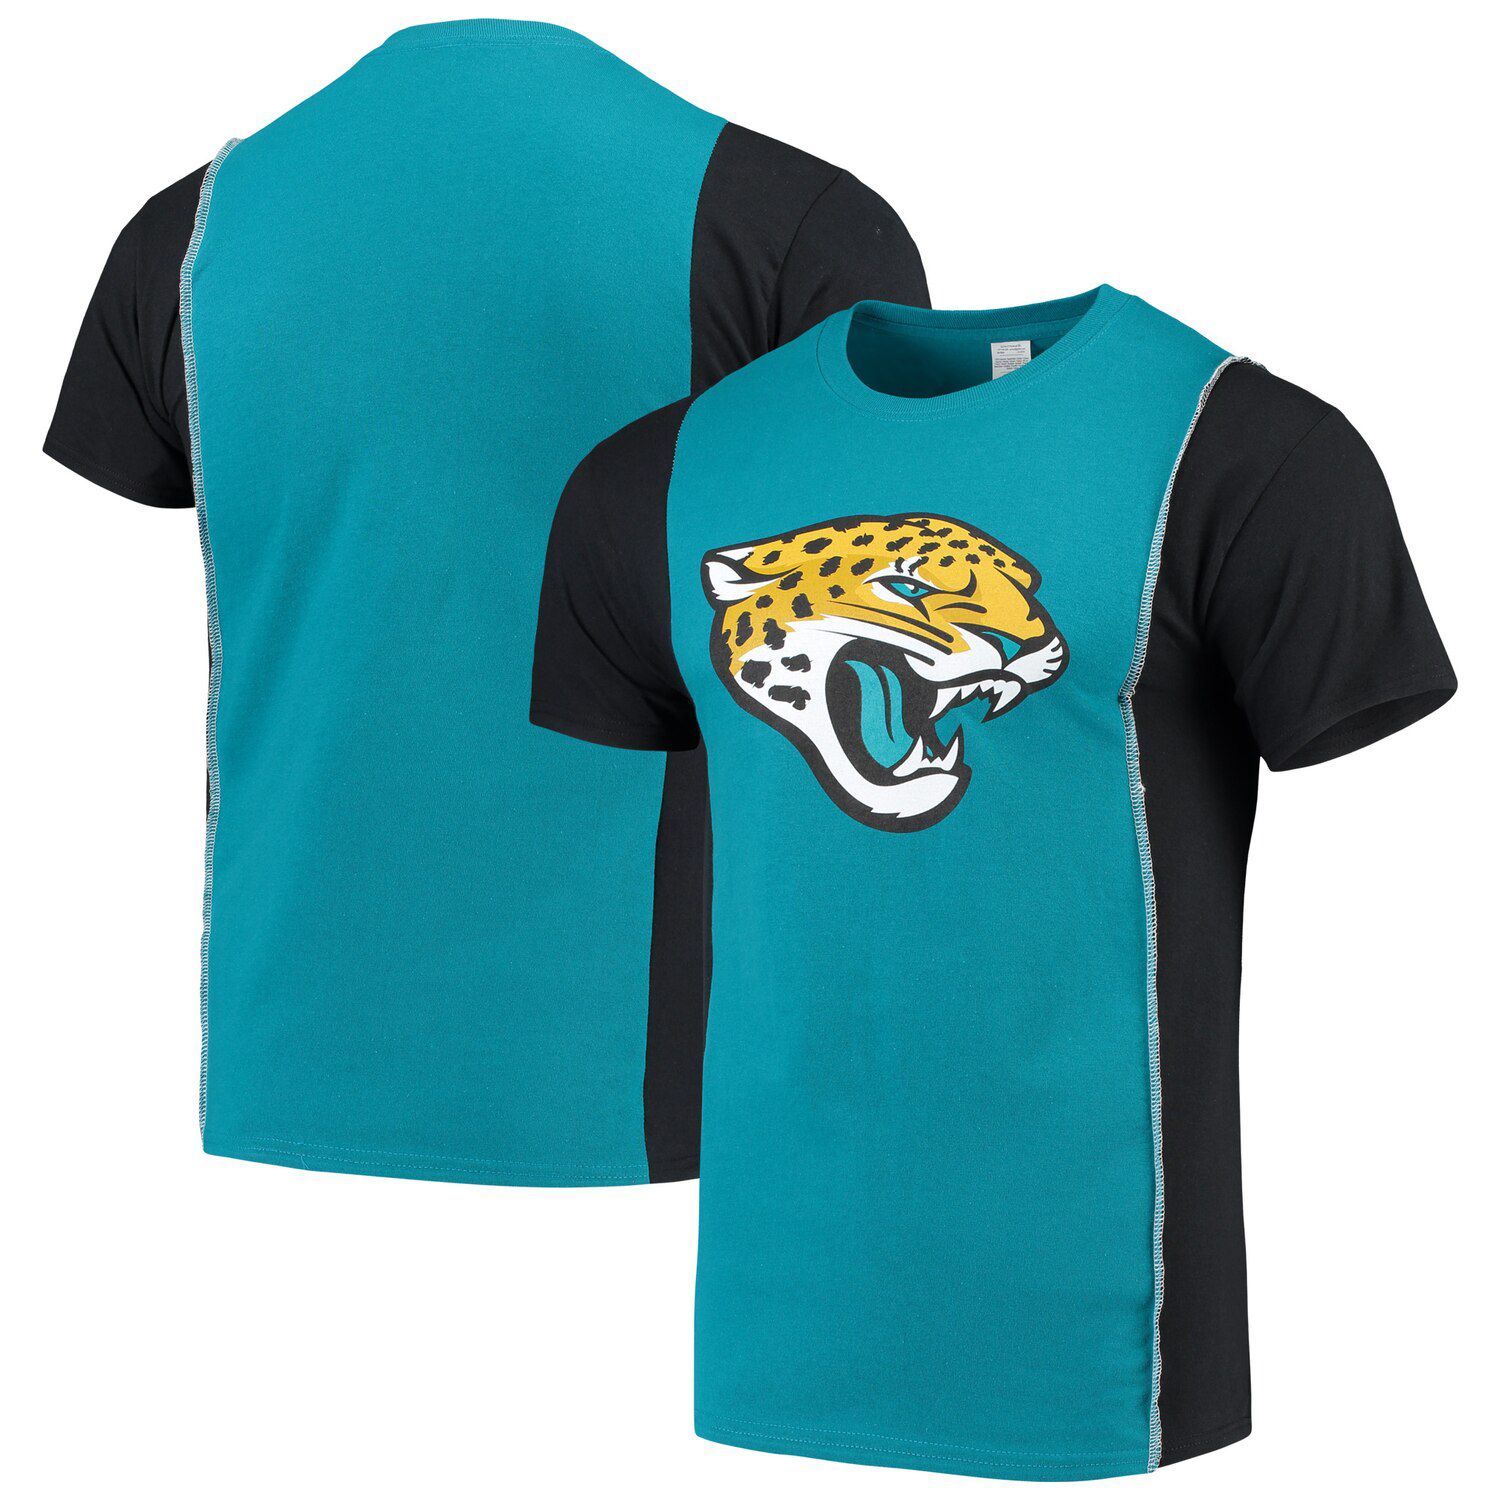 Image for Unbranded Men's Refried Apparel Teal/Black Jacksonville Jaguars Sustainable Upcycled Split T-Shirt at Kohl's.